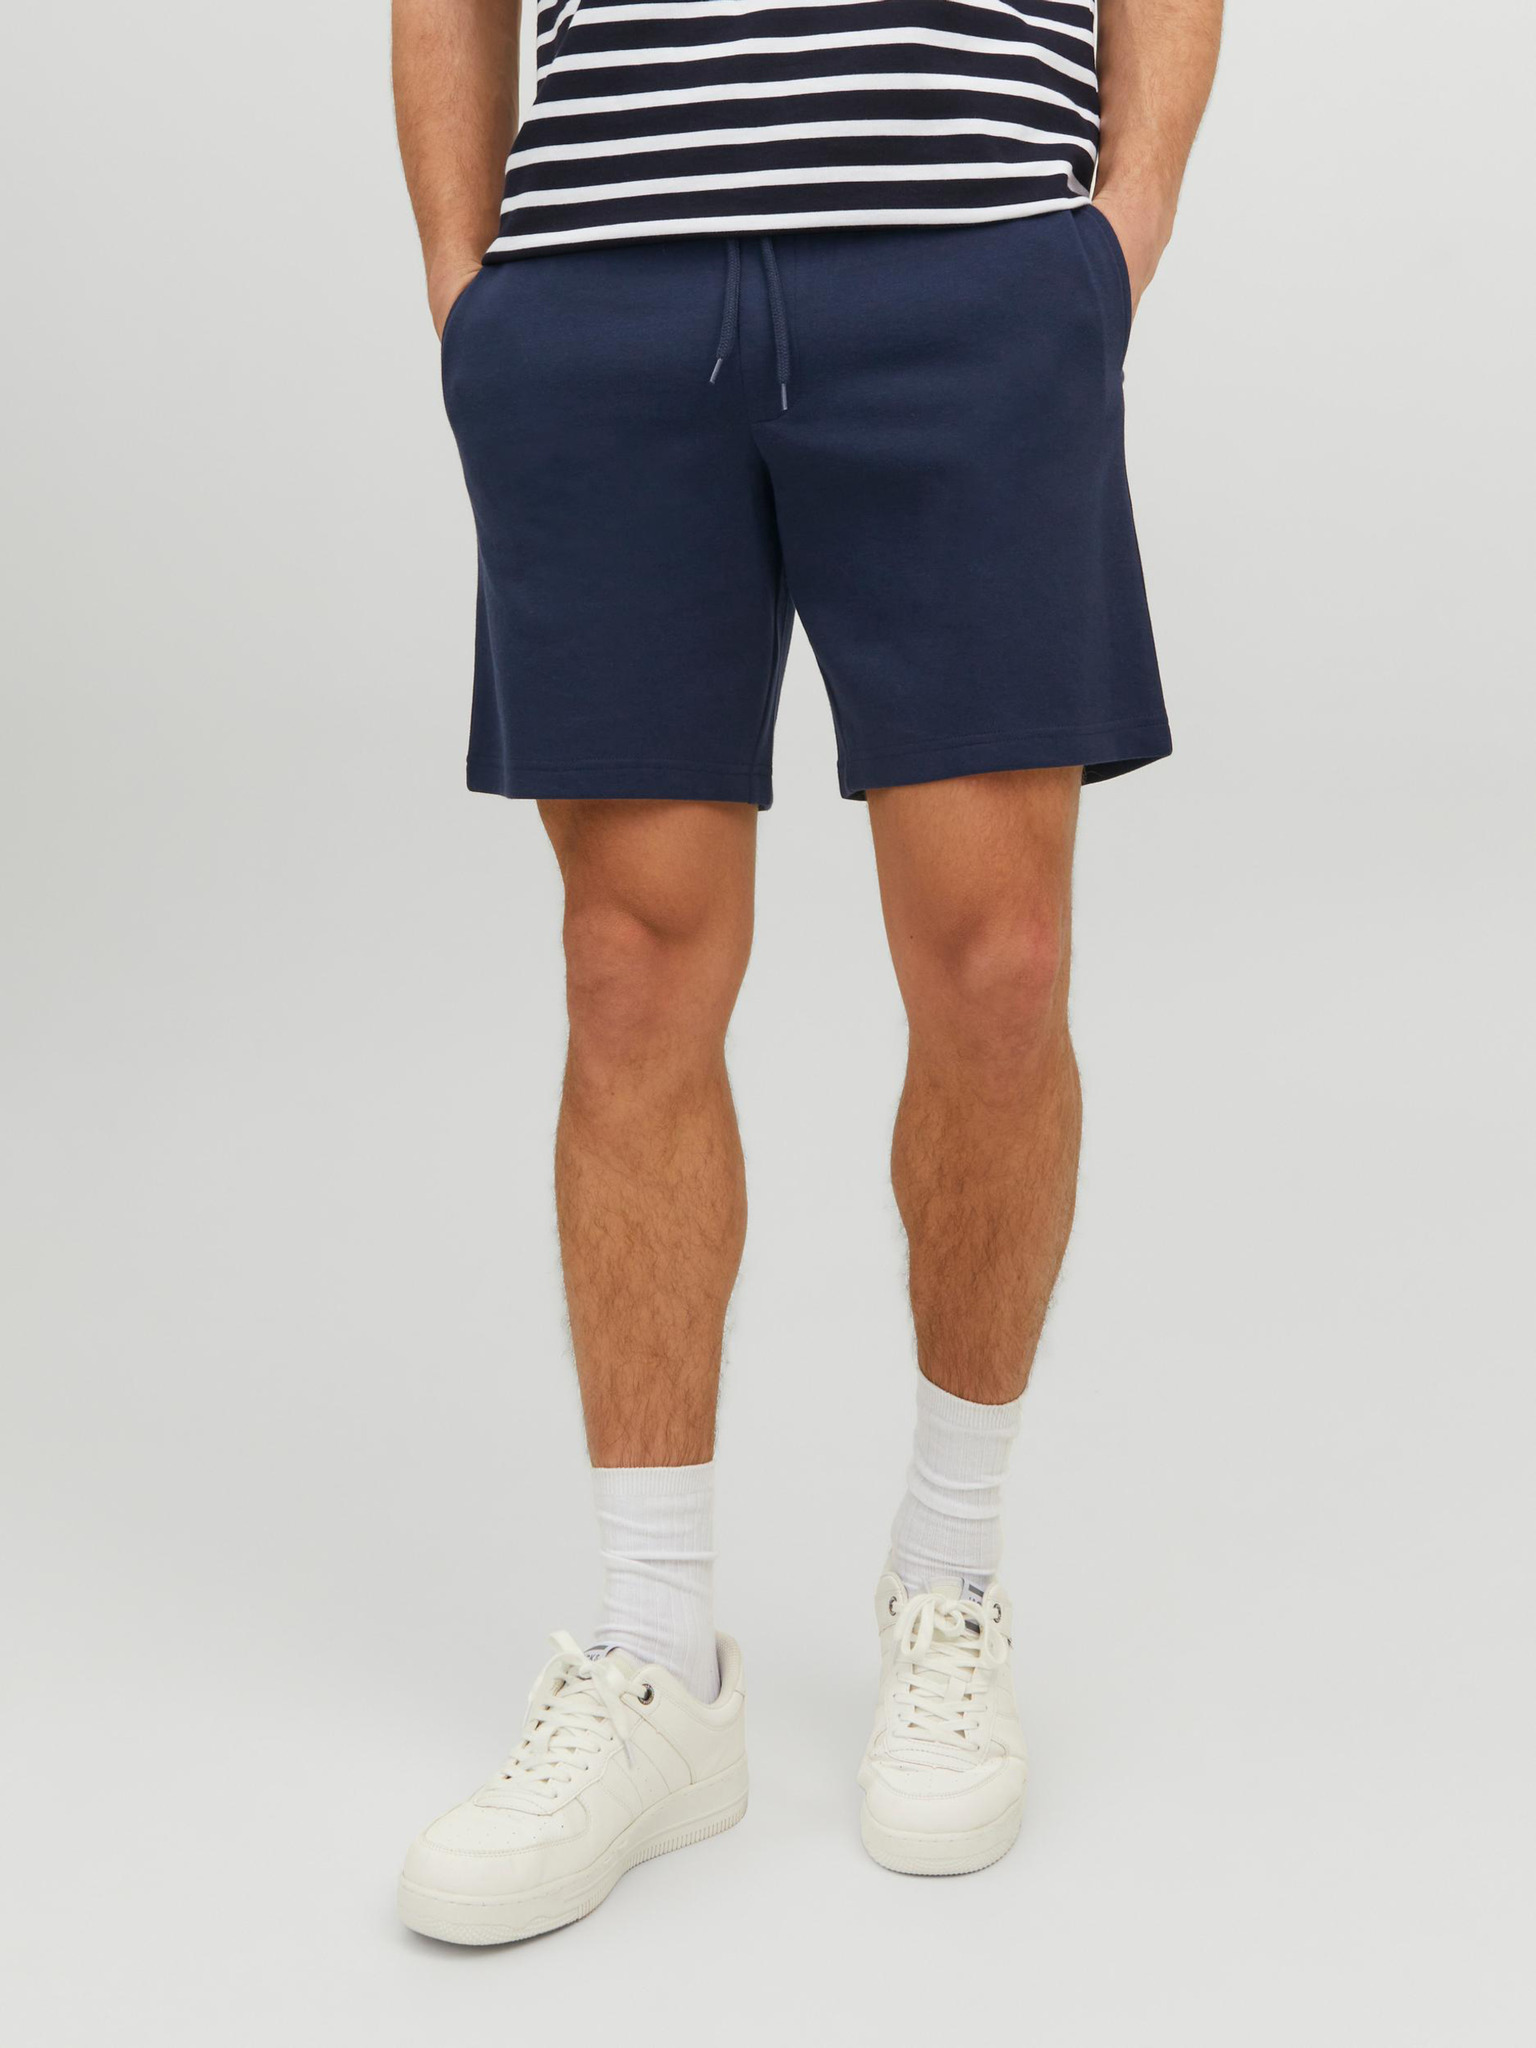 Shorts: Buy Women Grey Cotton Shorts Online - Cliths.com